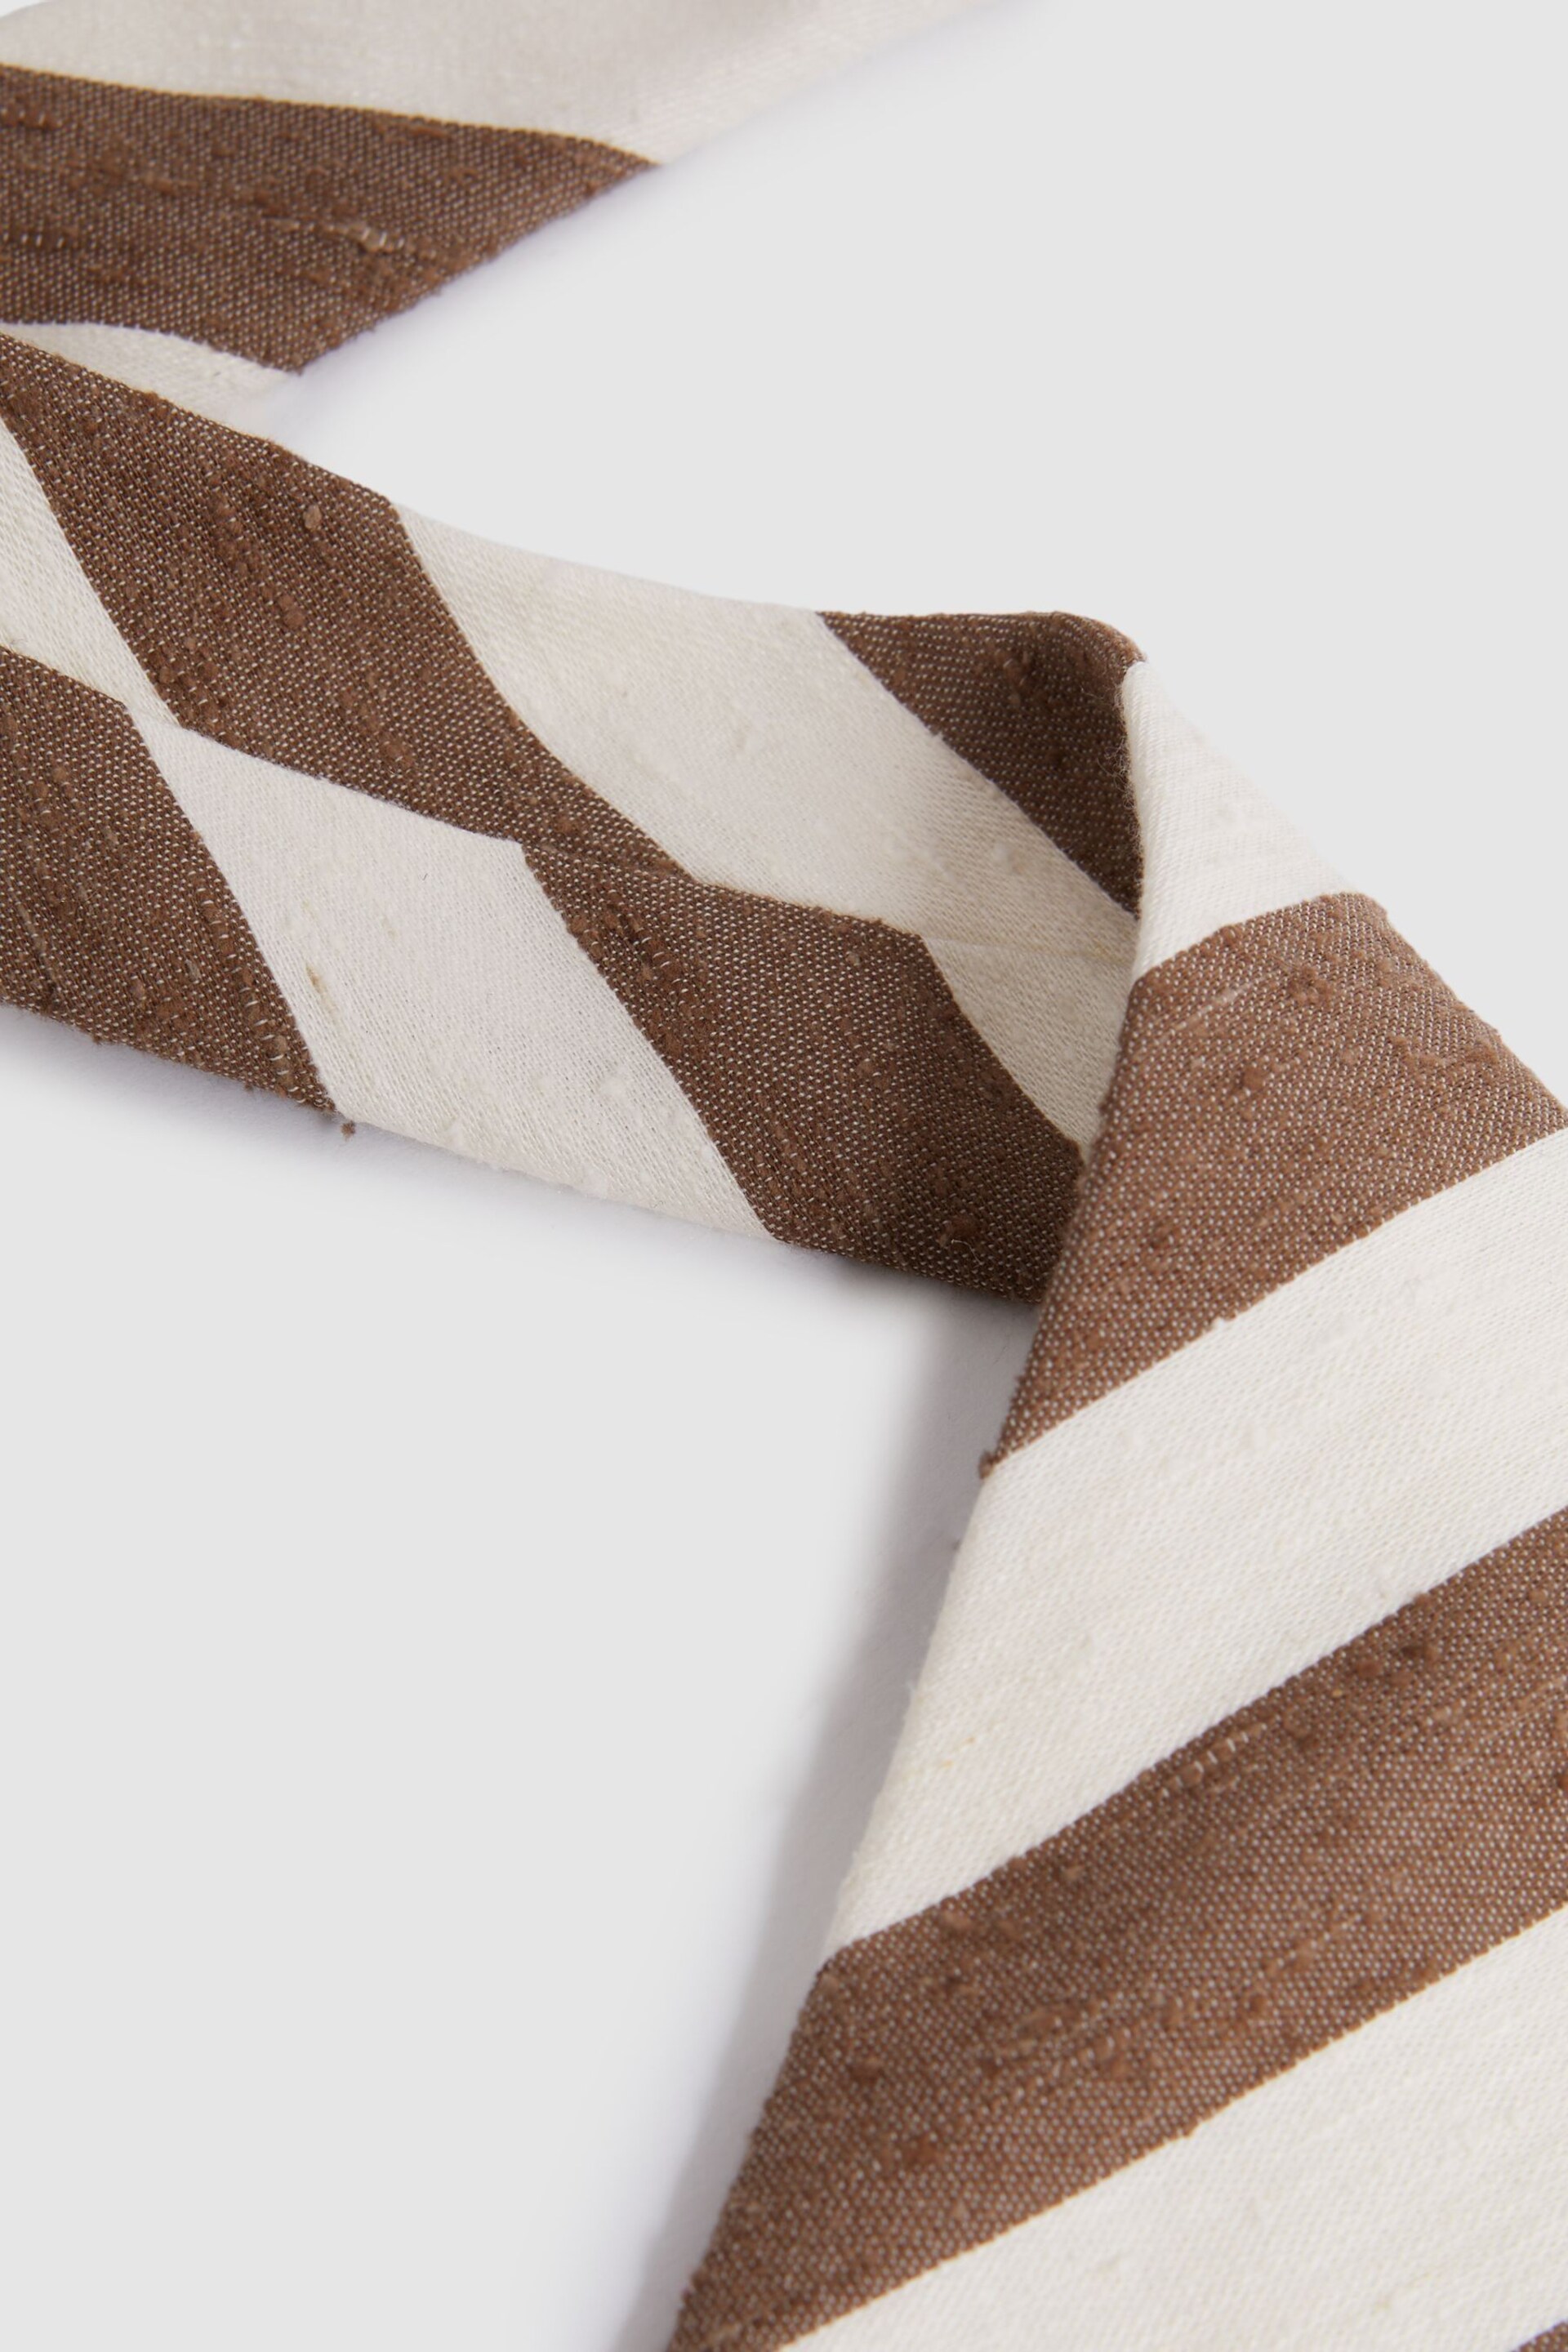 Reiss Chocolate/Ivory Sienna Textured Silk Blend Striped Tie - Image 3 of 5